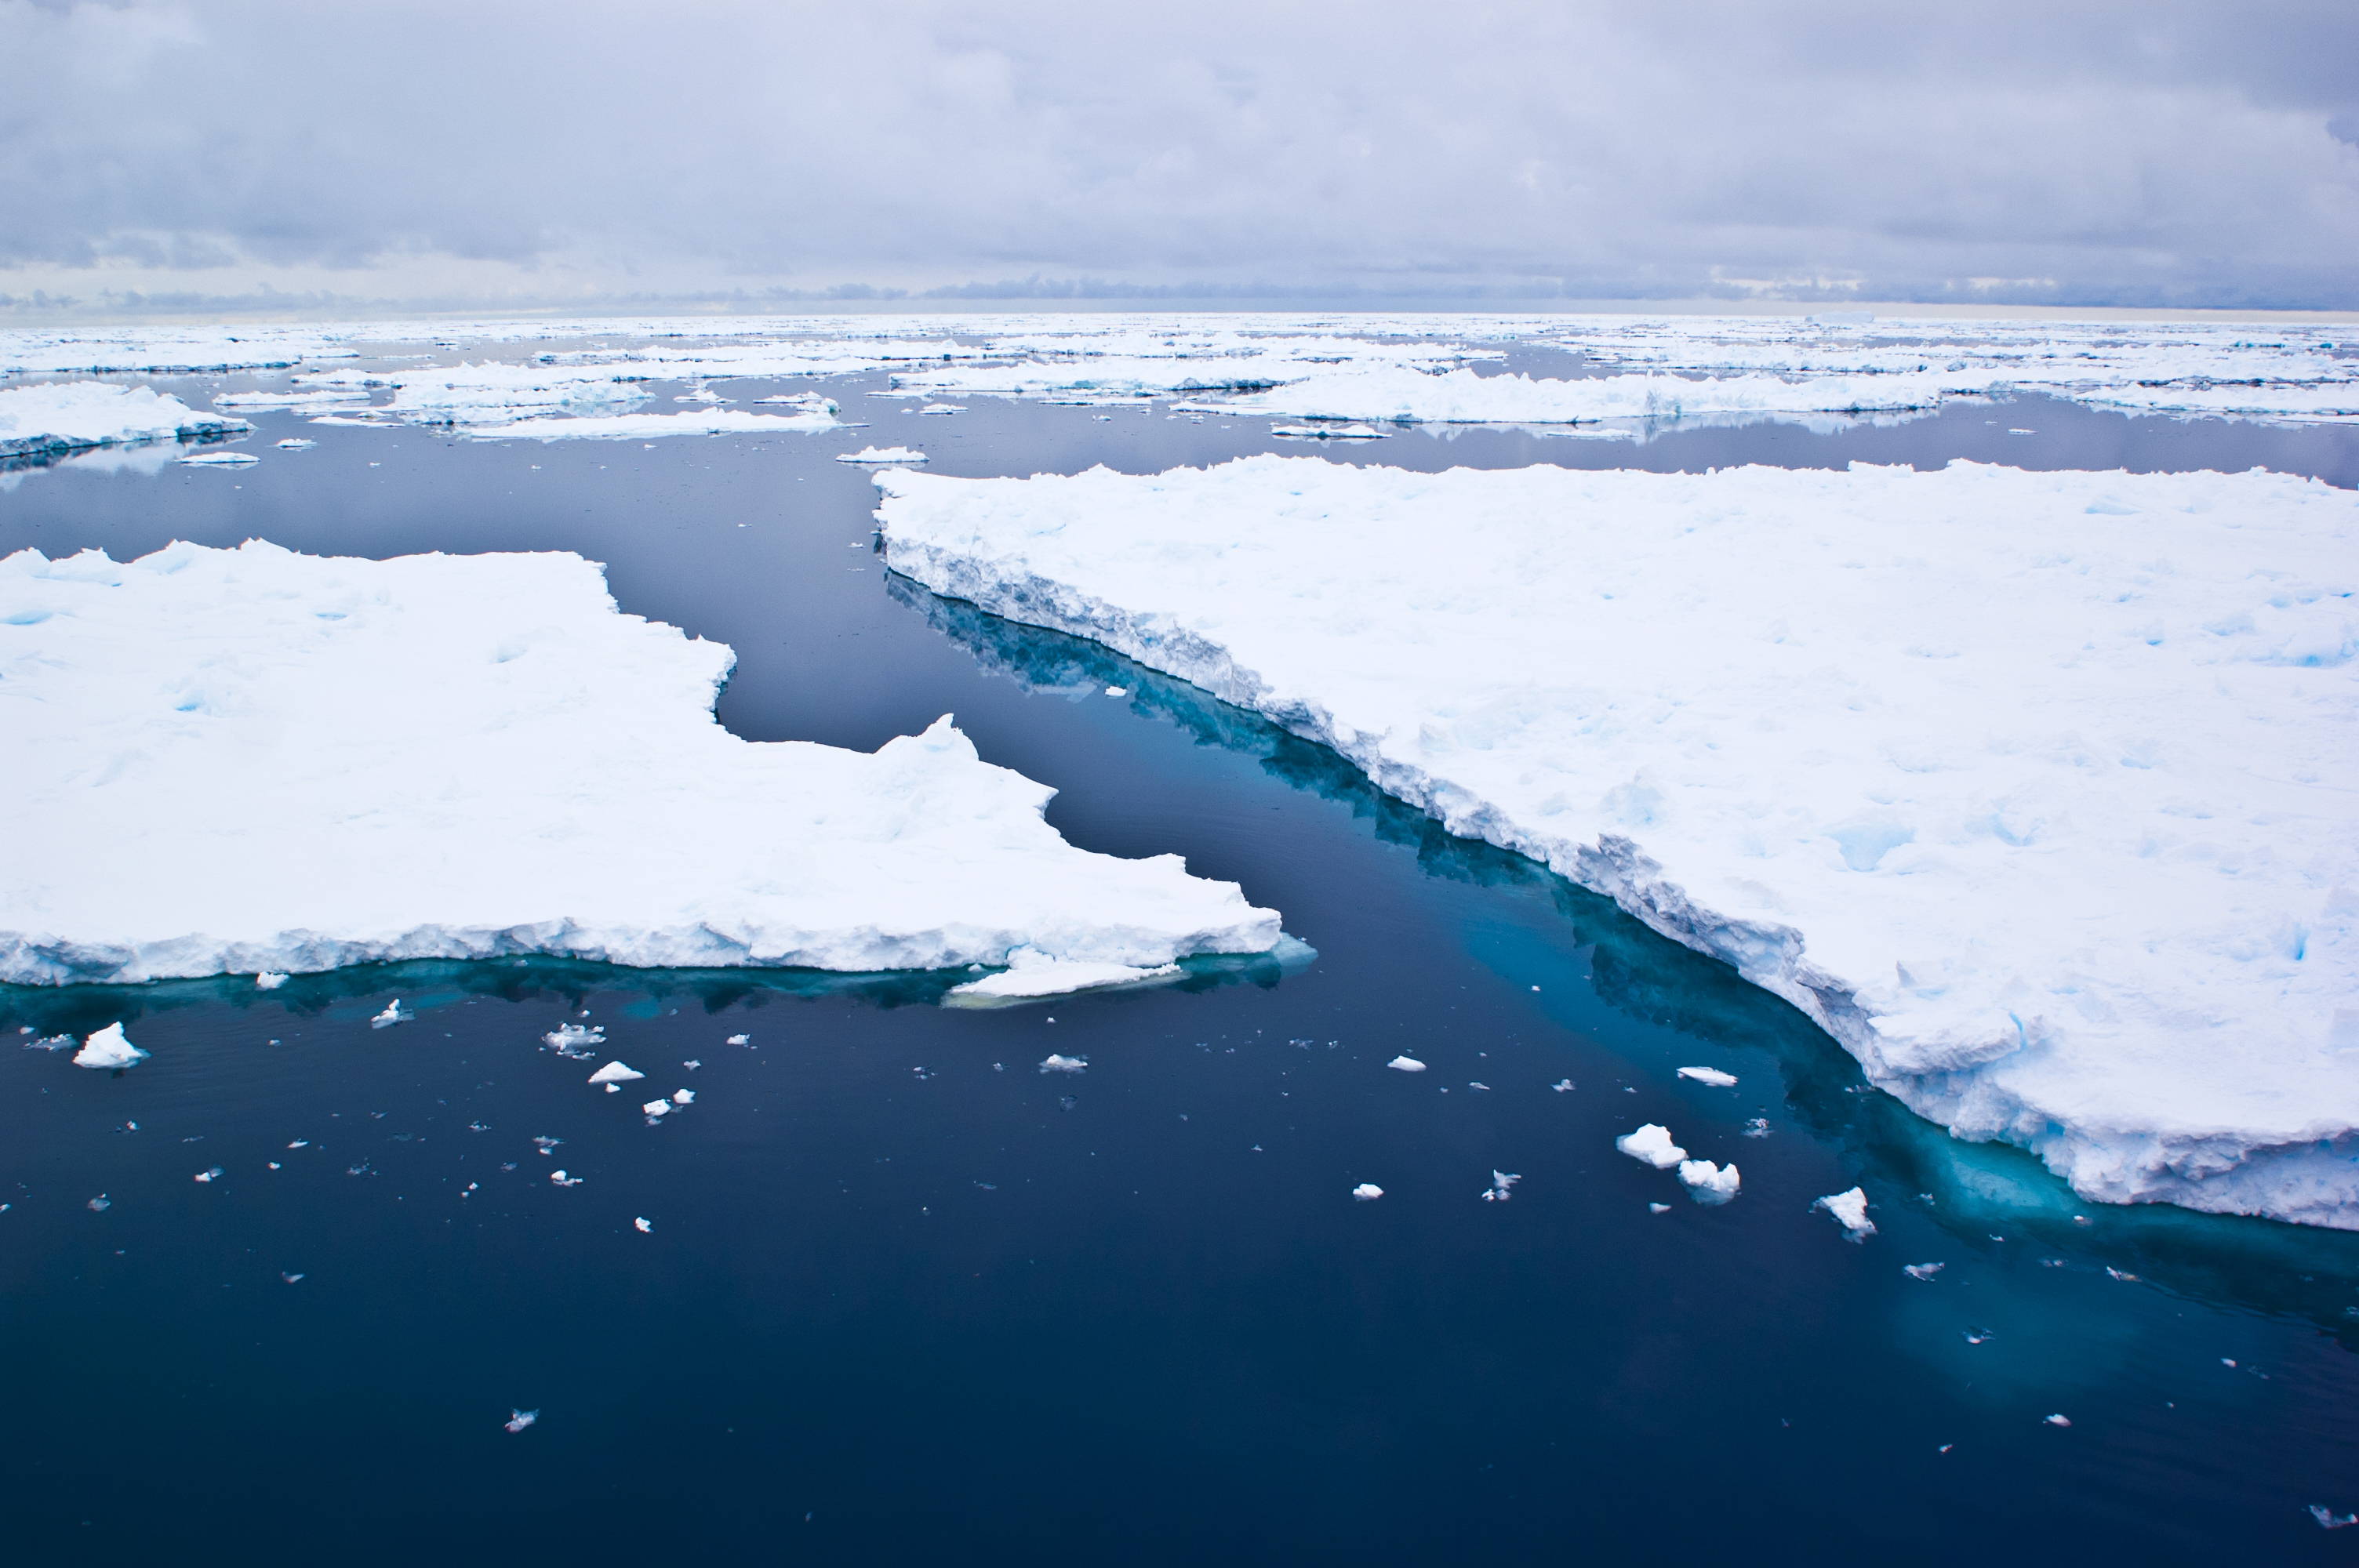 Pack ice off the Antarctic shelf